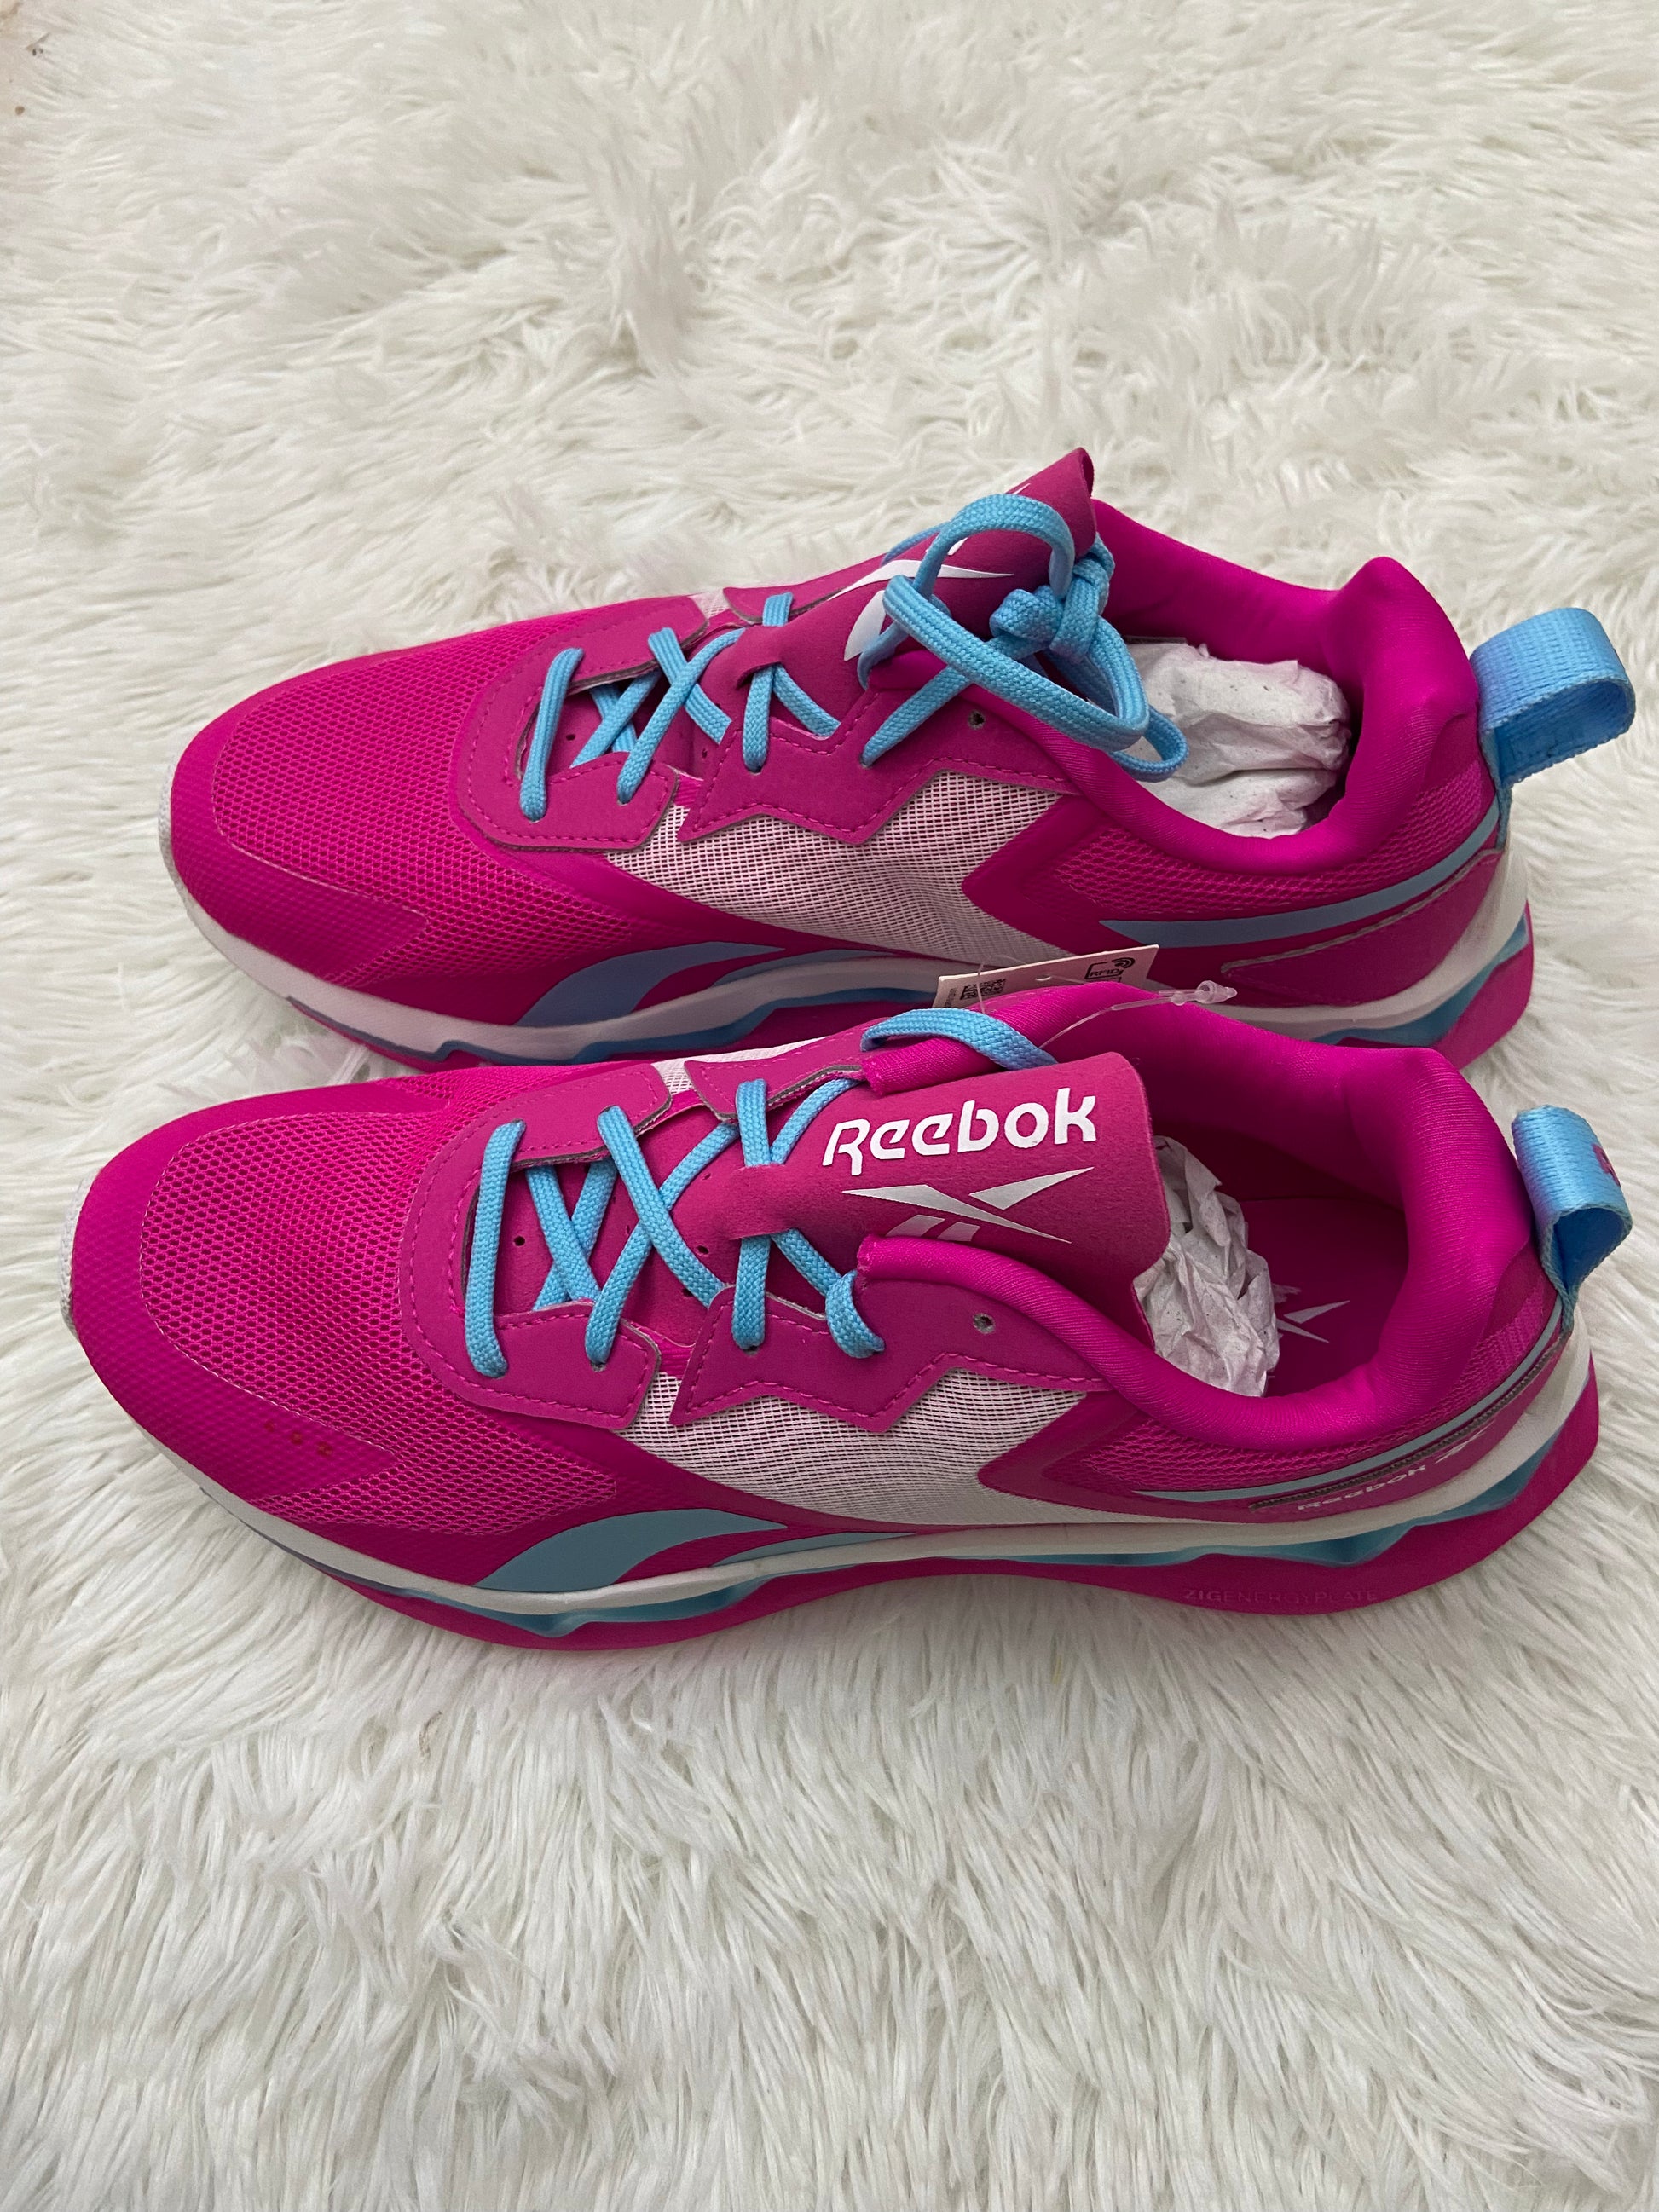 Tenis Reebok original rosado con azul. – Qlindo Store